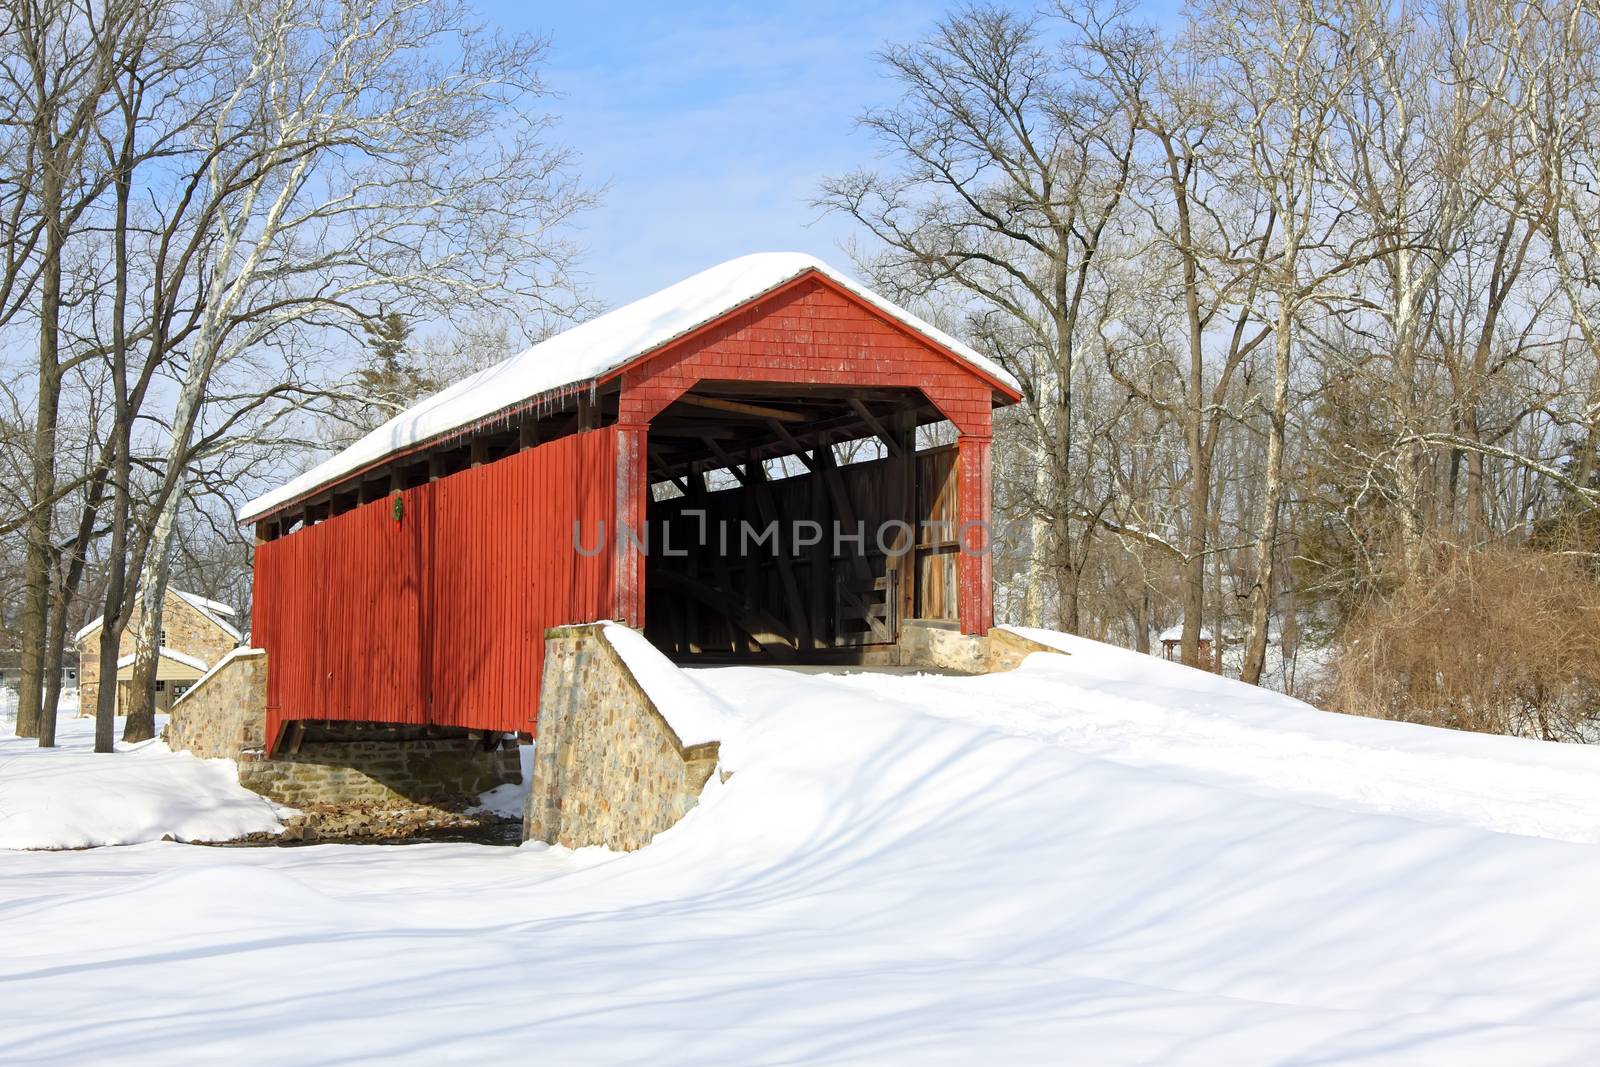 Covered Bridge in Snow by DelmasLehman